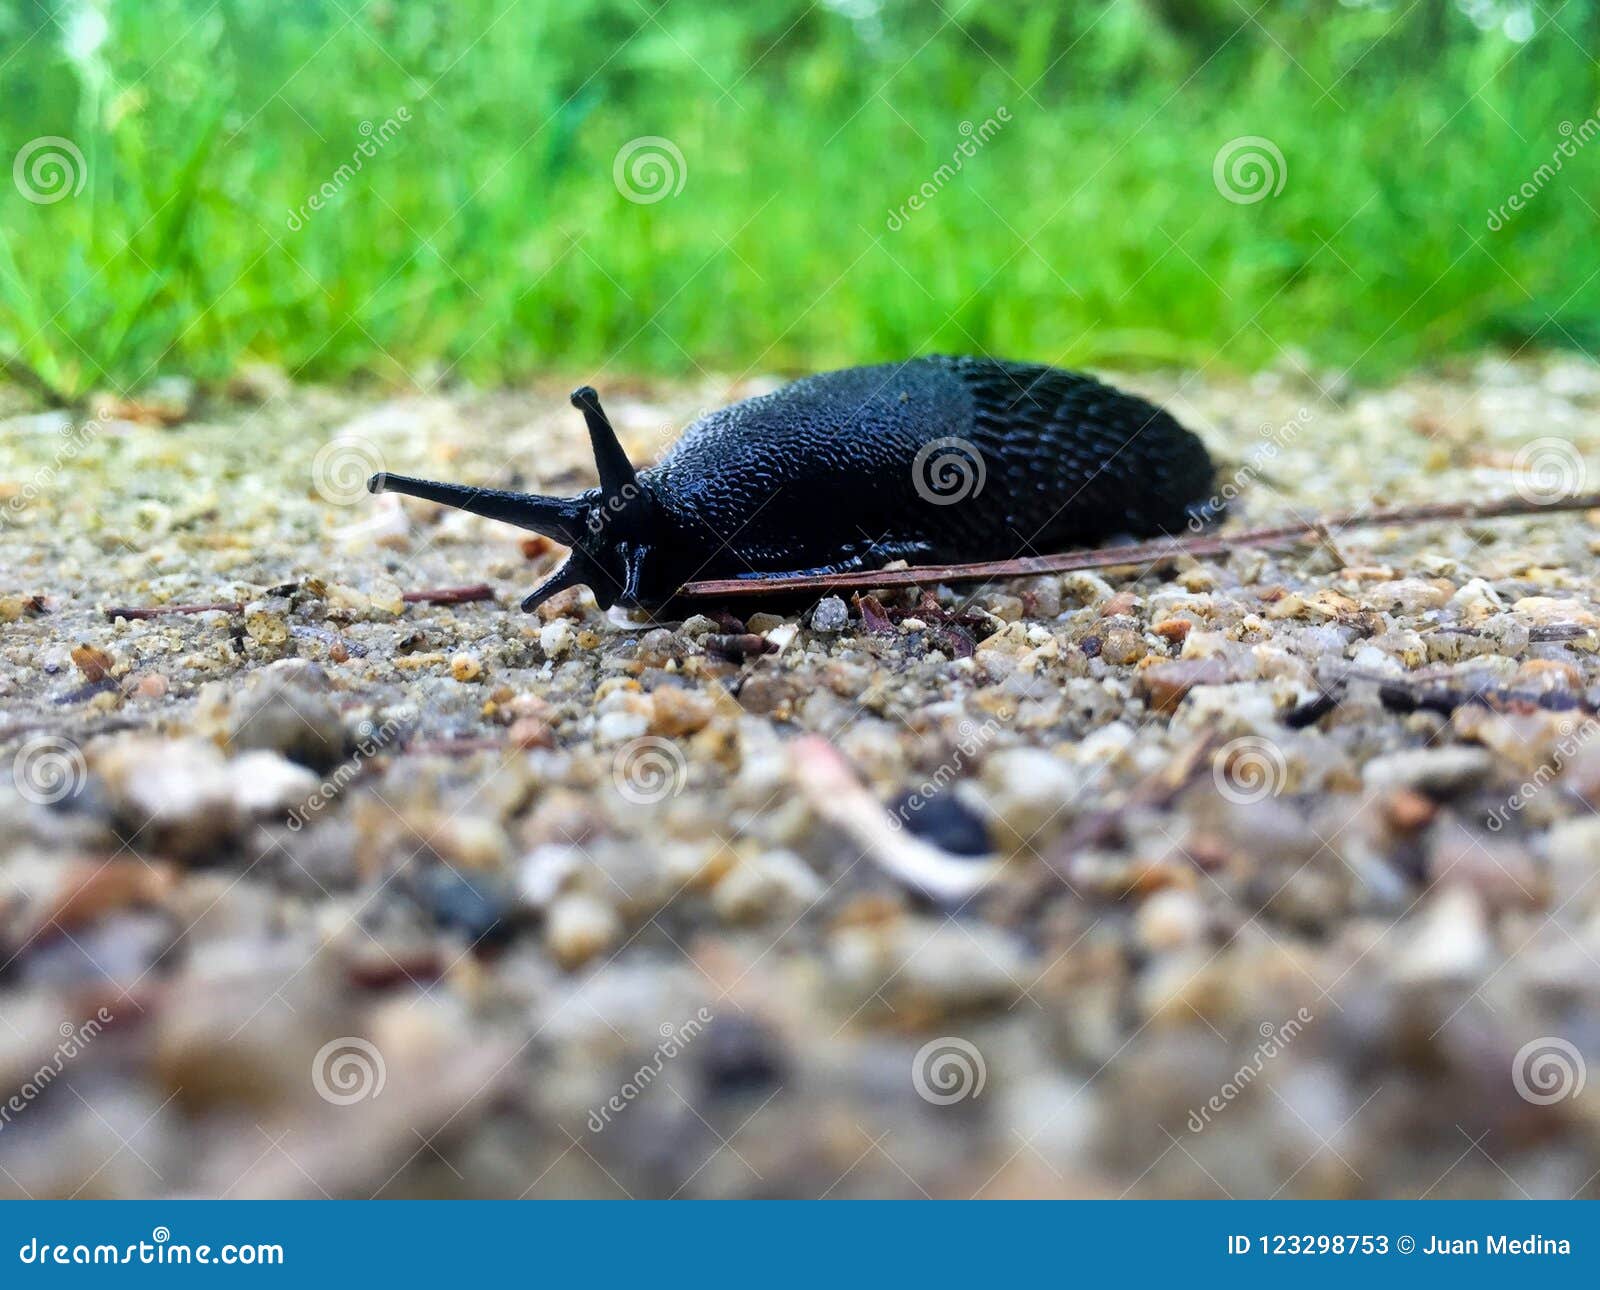 black slug at the park